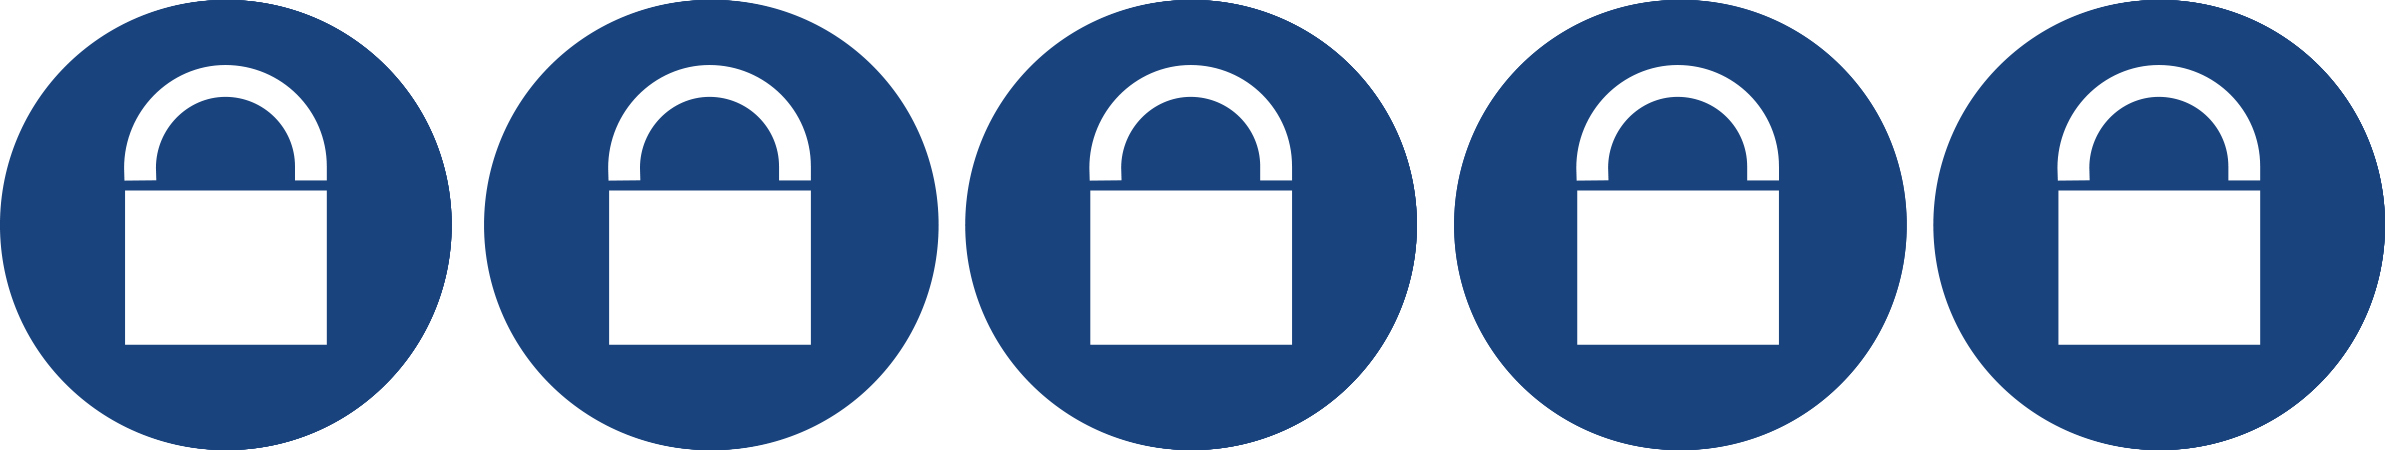 Viro security classification https://www.viro.it/files/immagini/2RuoteEN.jpg _blank